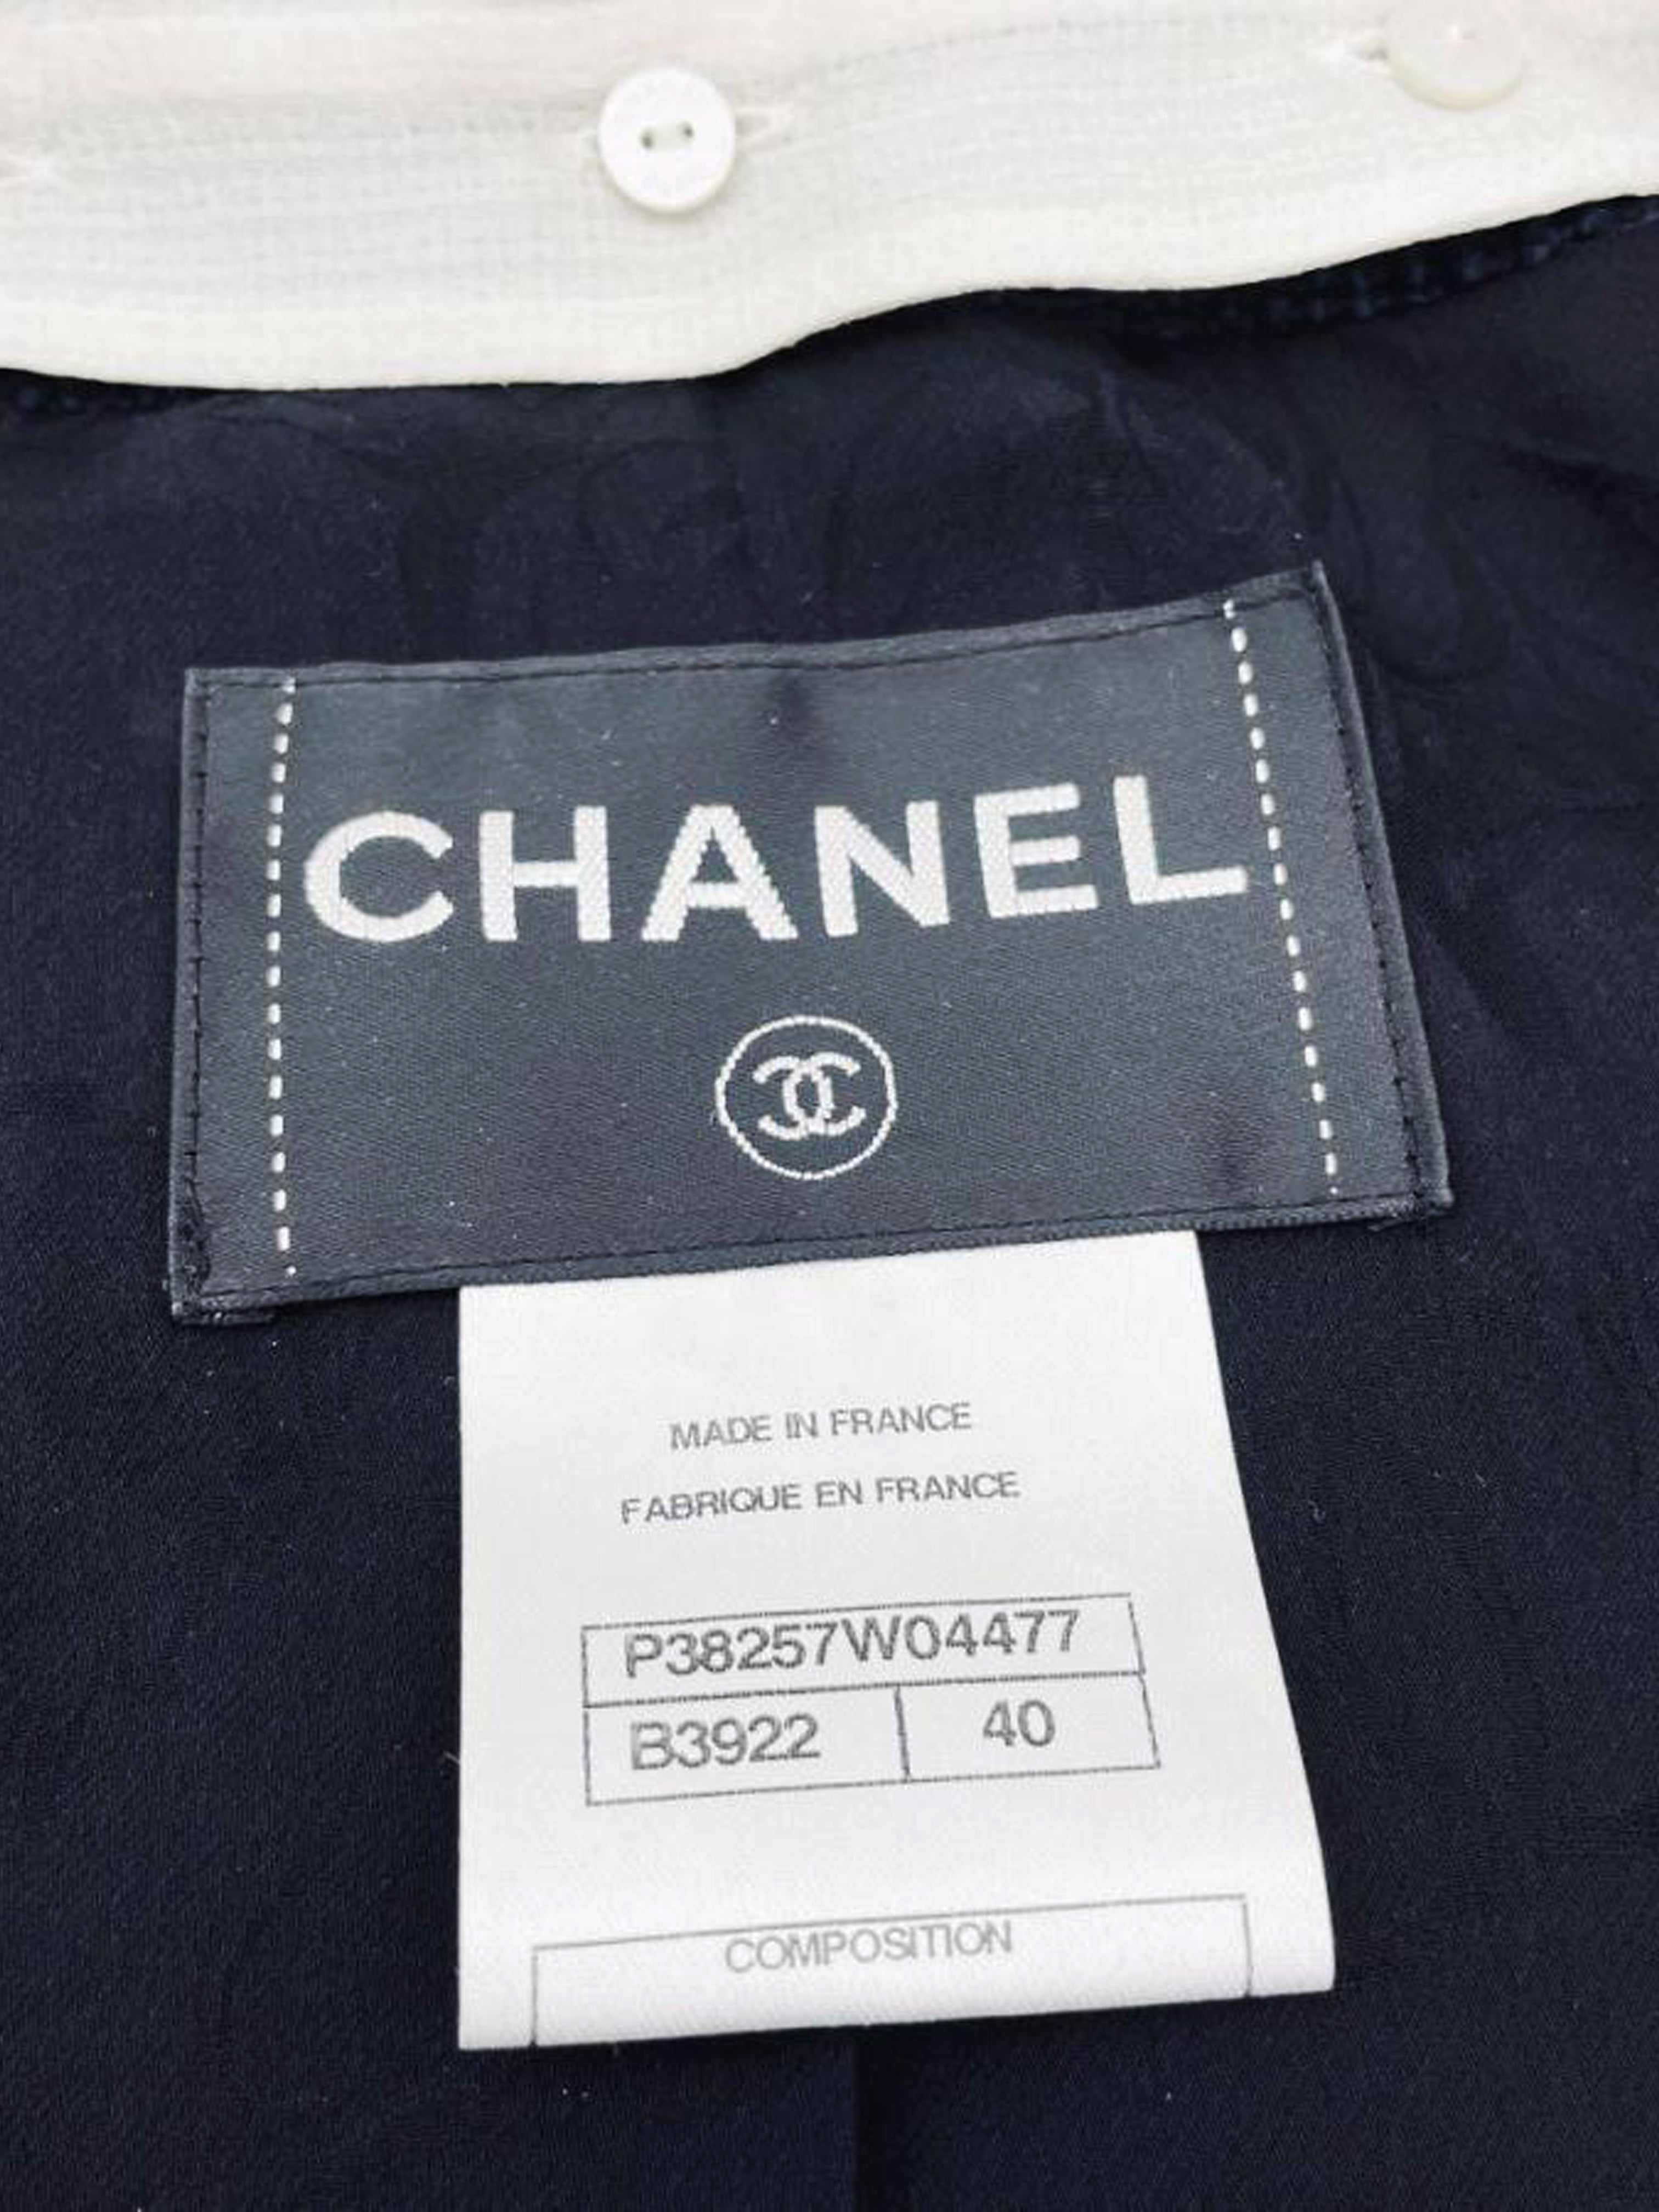 Chanel Spring 2010 Tweed Jacket and Skirt Set